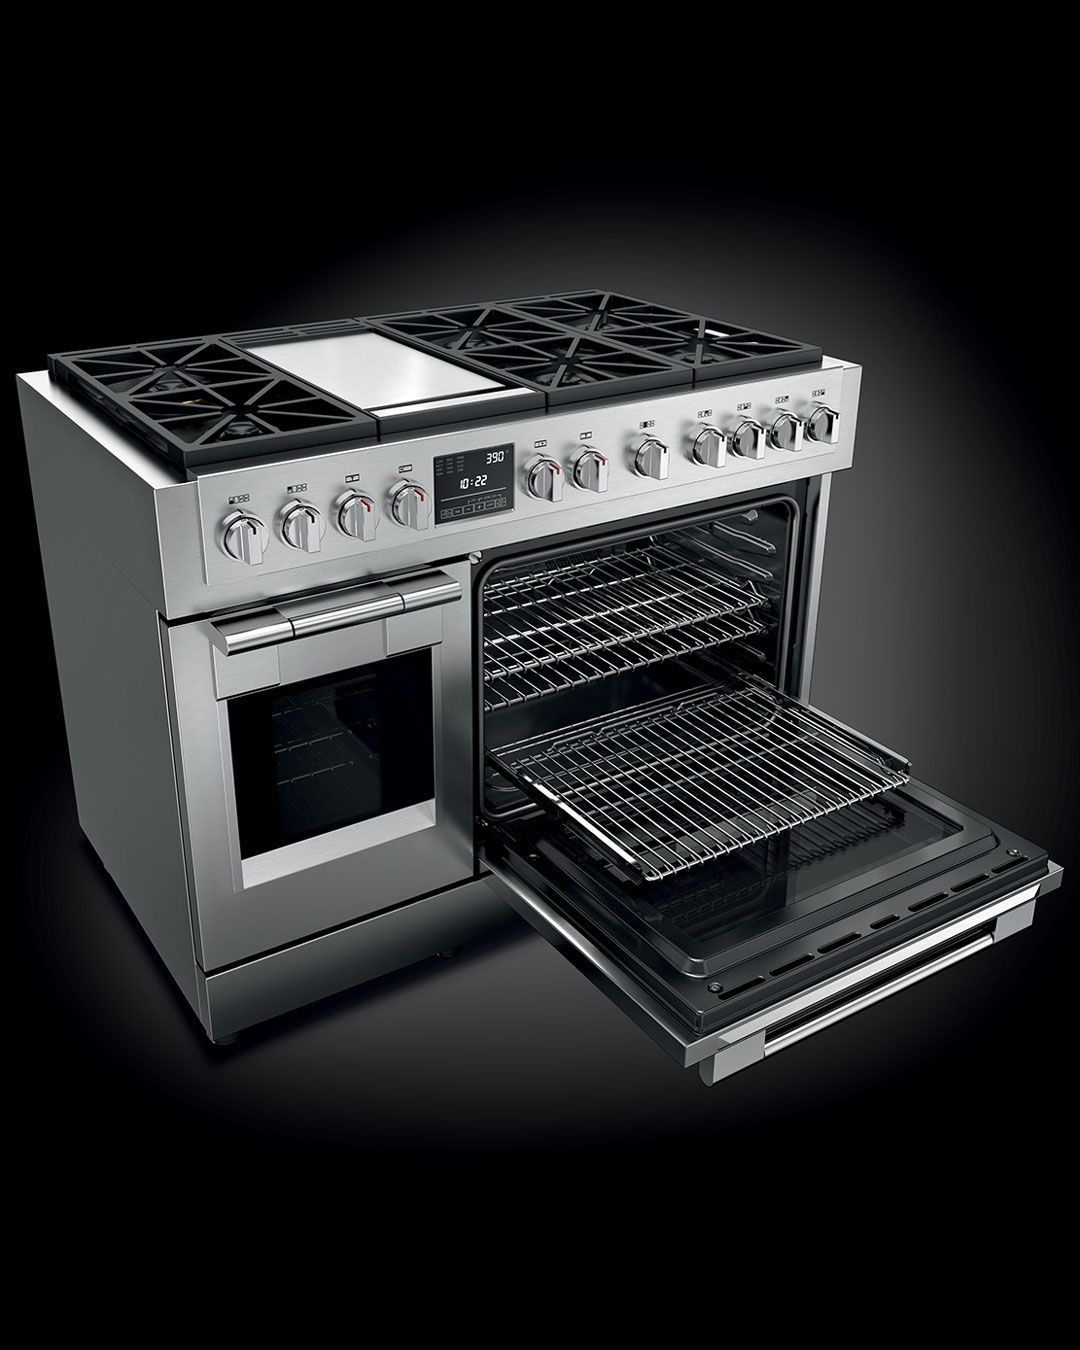 fulgor milano range cooker, kitchen appliances at caterbitz dorset